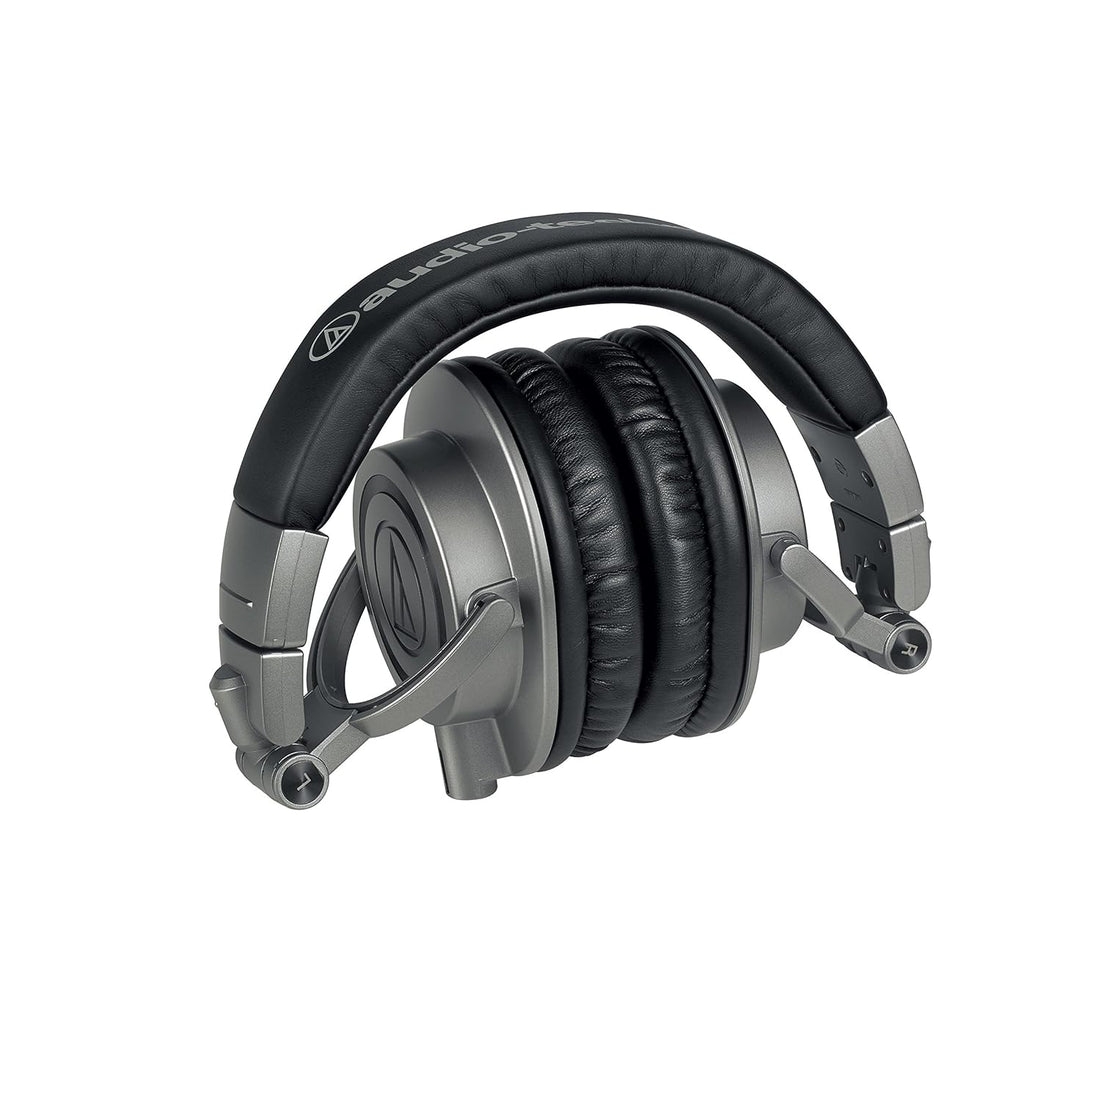 Audio-Technica ATH-M50x Professional Monitor Headphones, Gun Metal